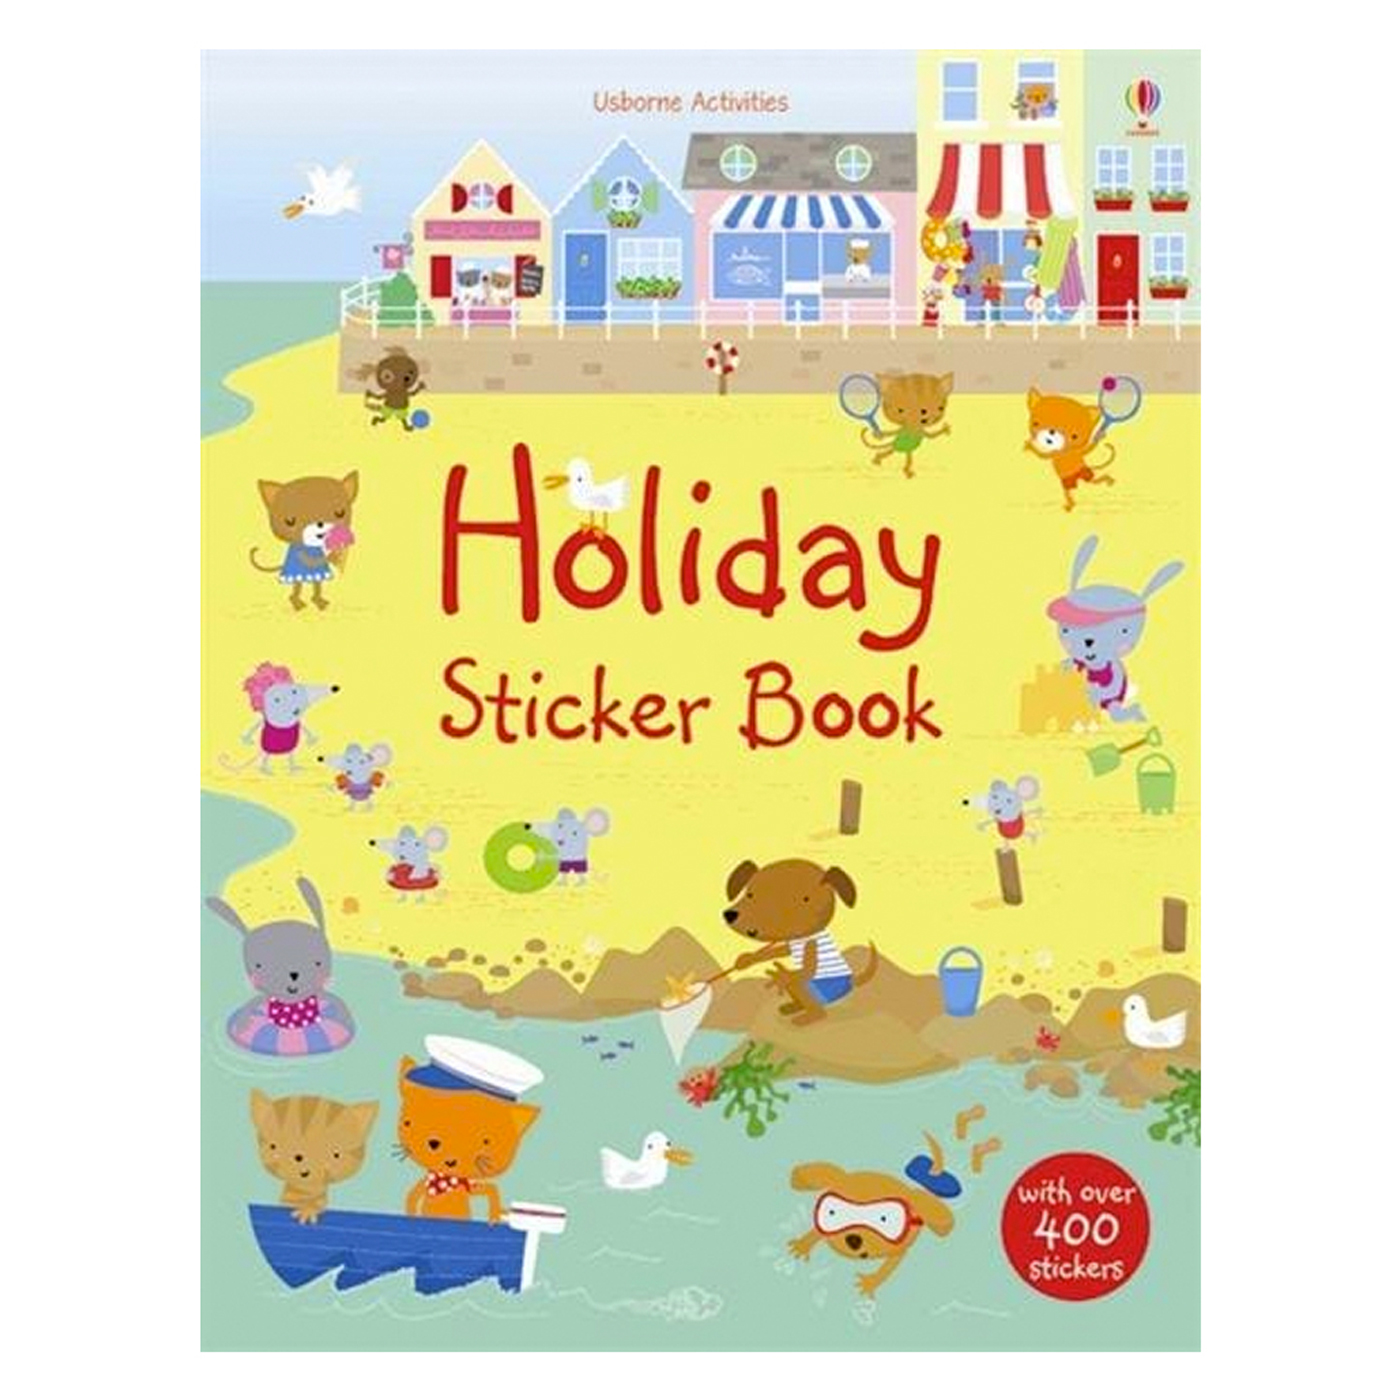  Holiday Sticker Book